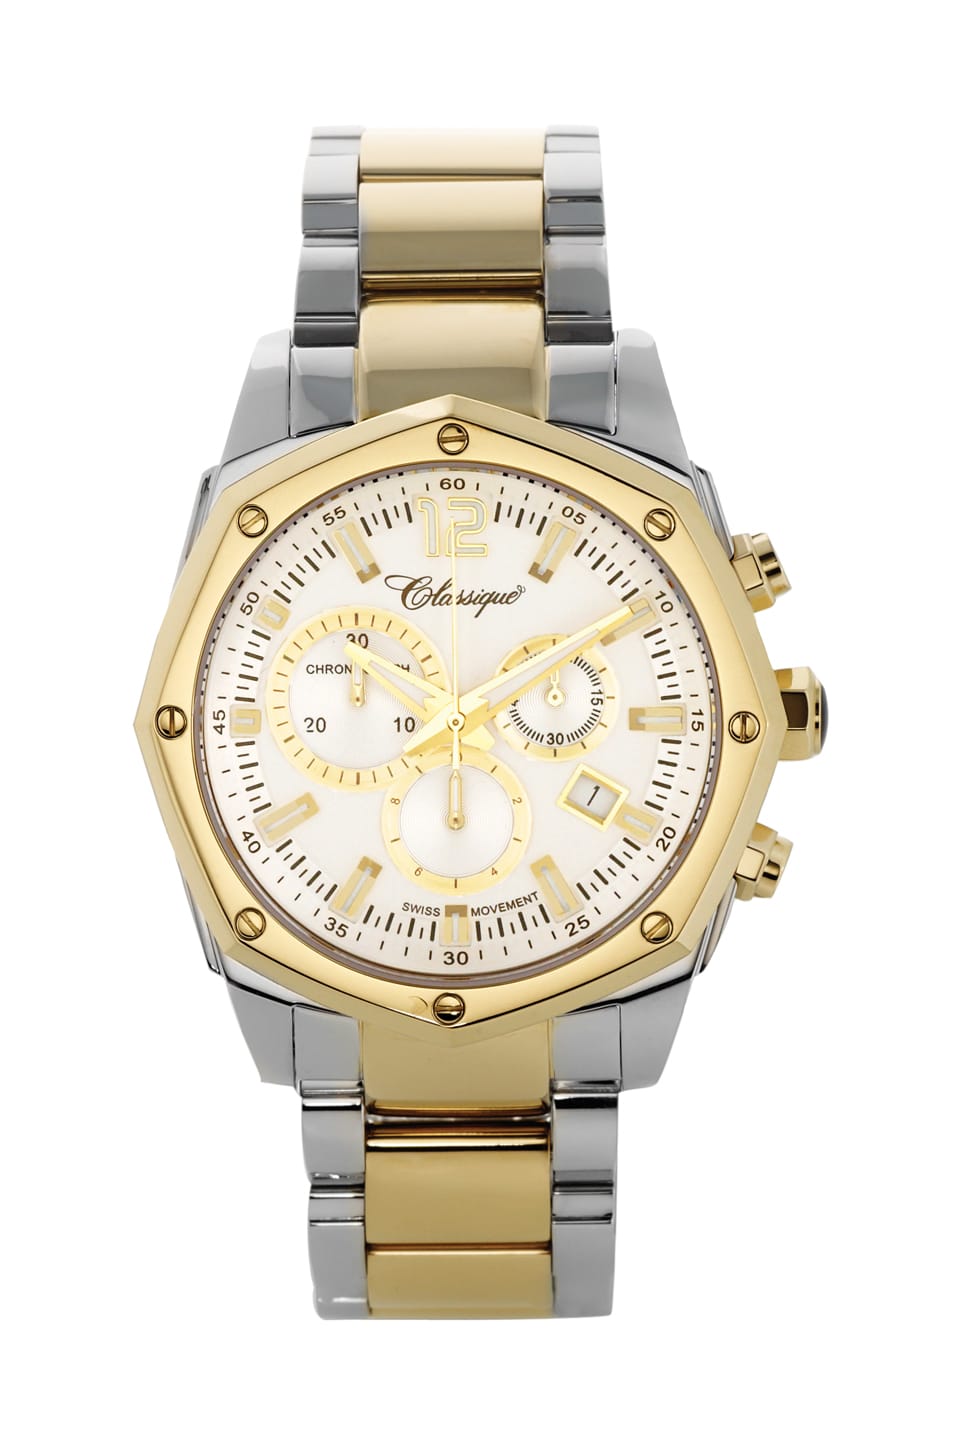 Chronograph 100m Swiss Quartz Gold Plated Watch available at LeGassick Diamonds and Jewellery Gold Coast, Australia.